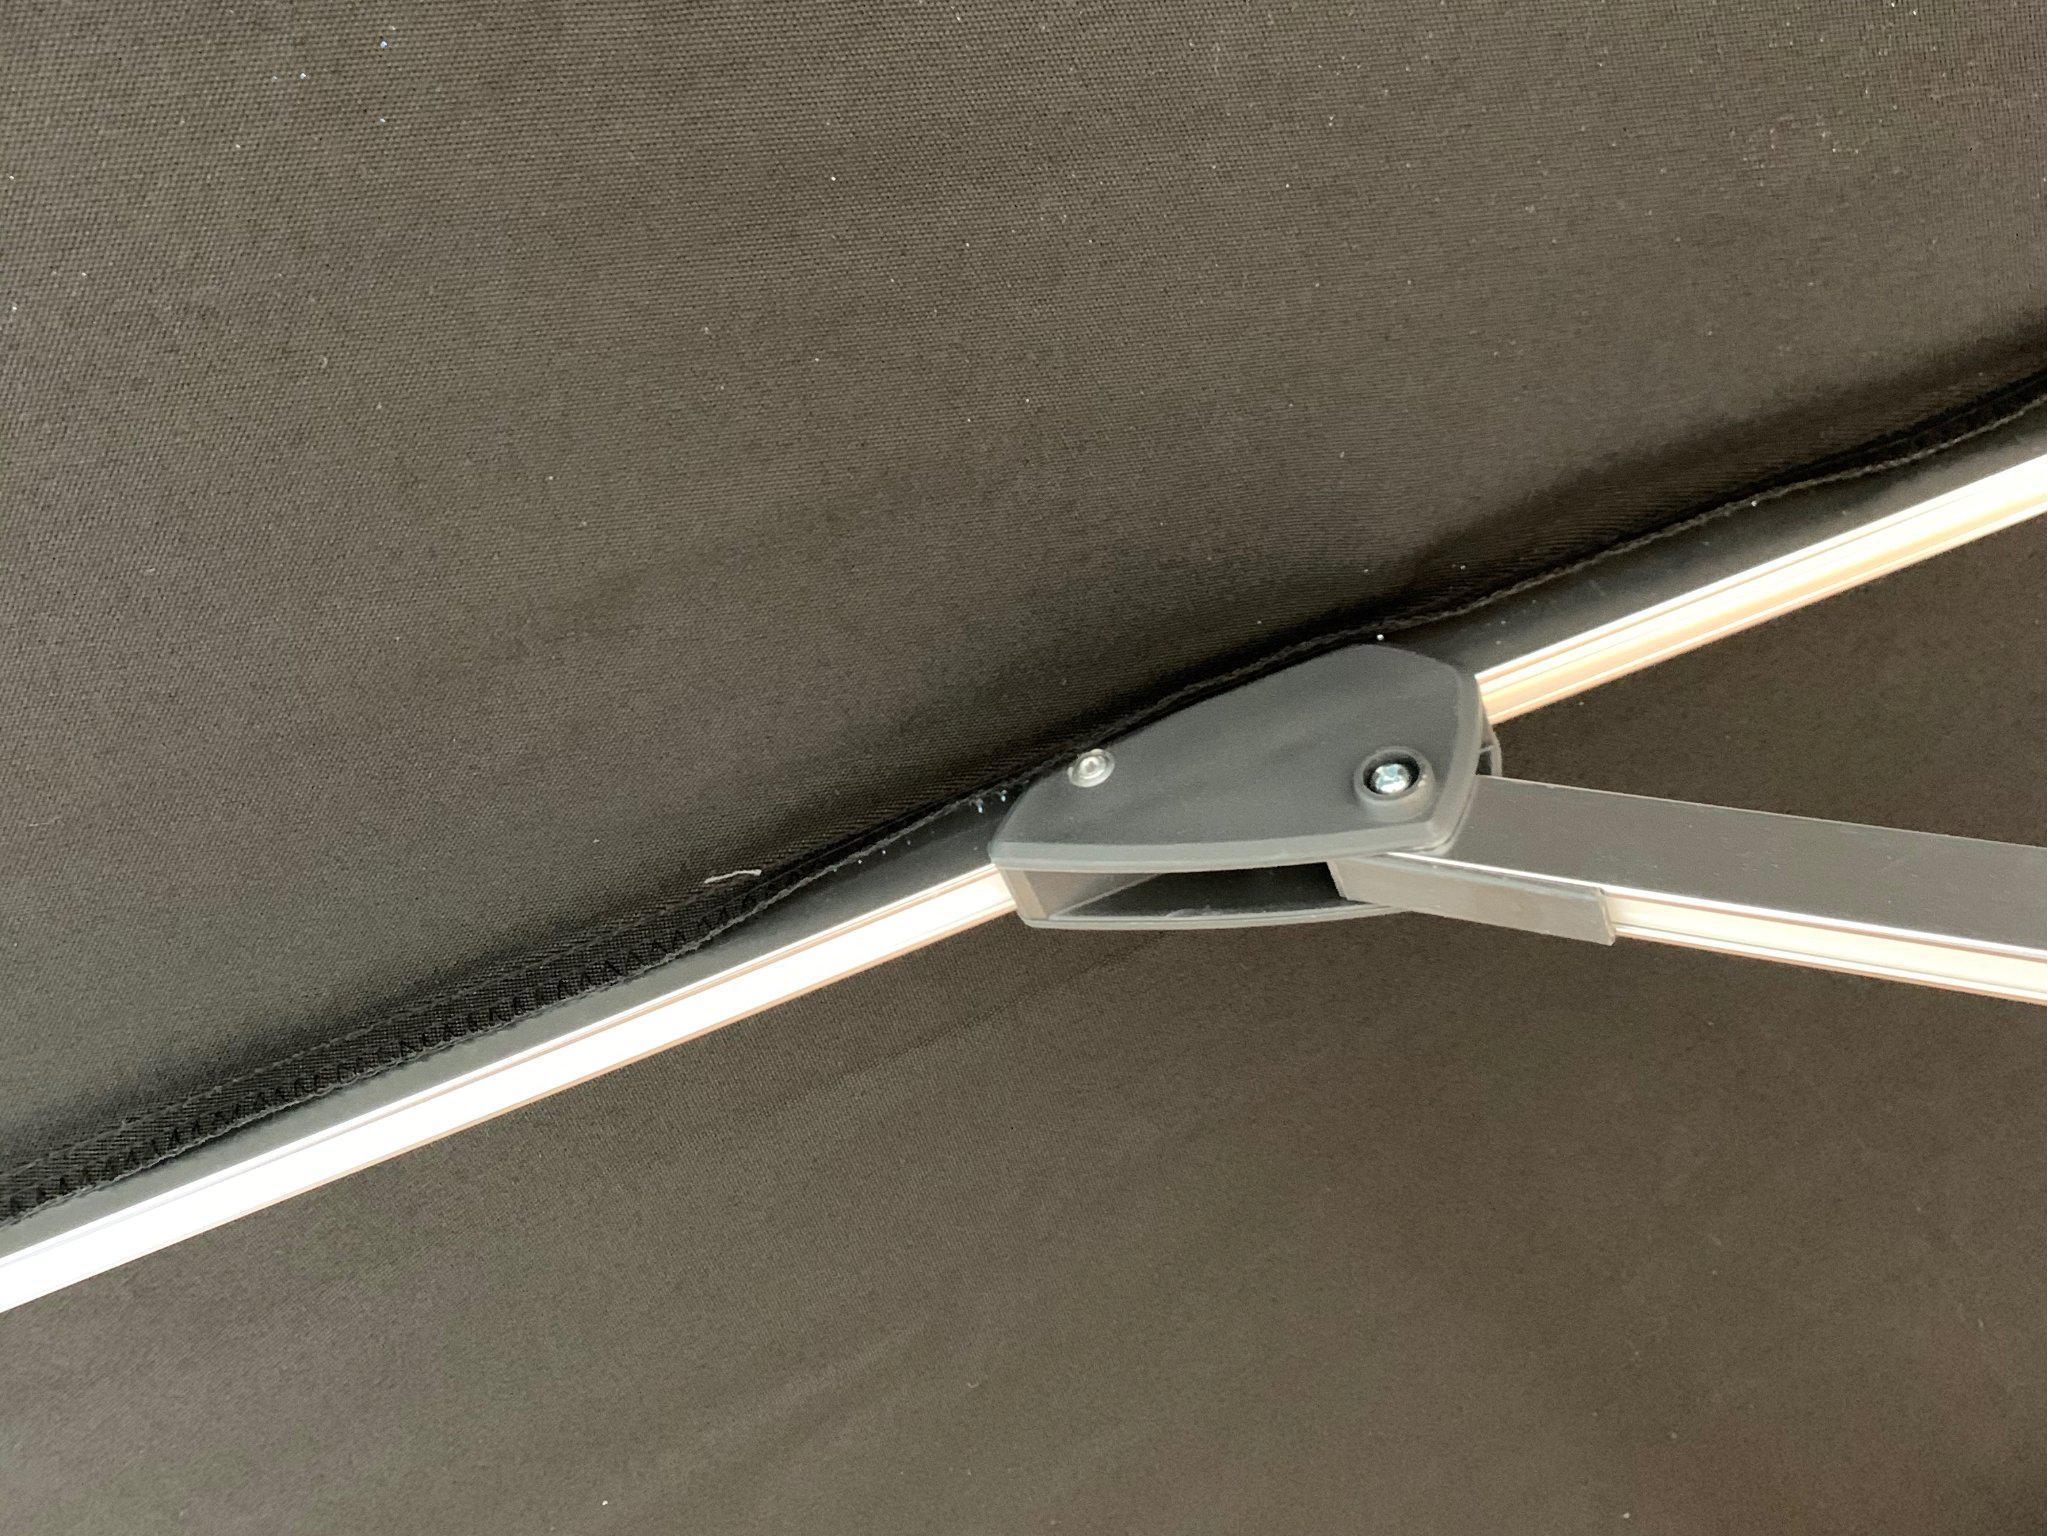 Coolaroo Bondi 3m Round LED Market Umbrella — Steel